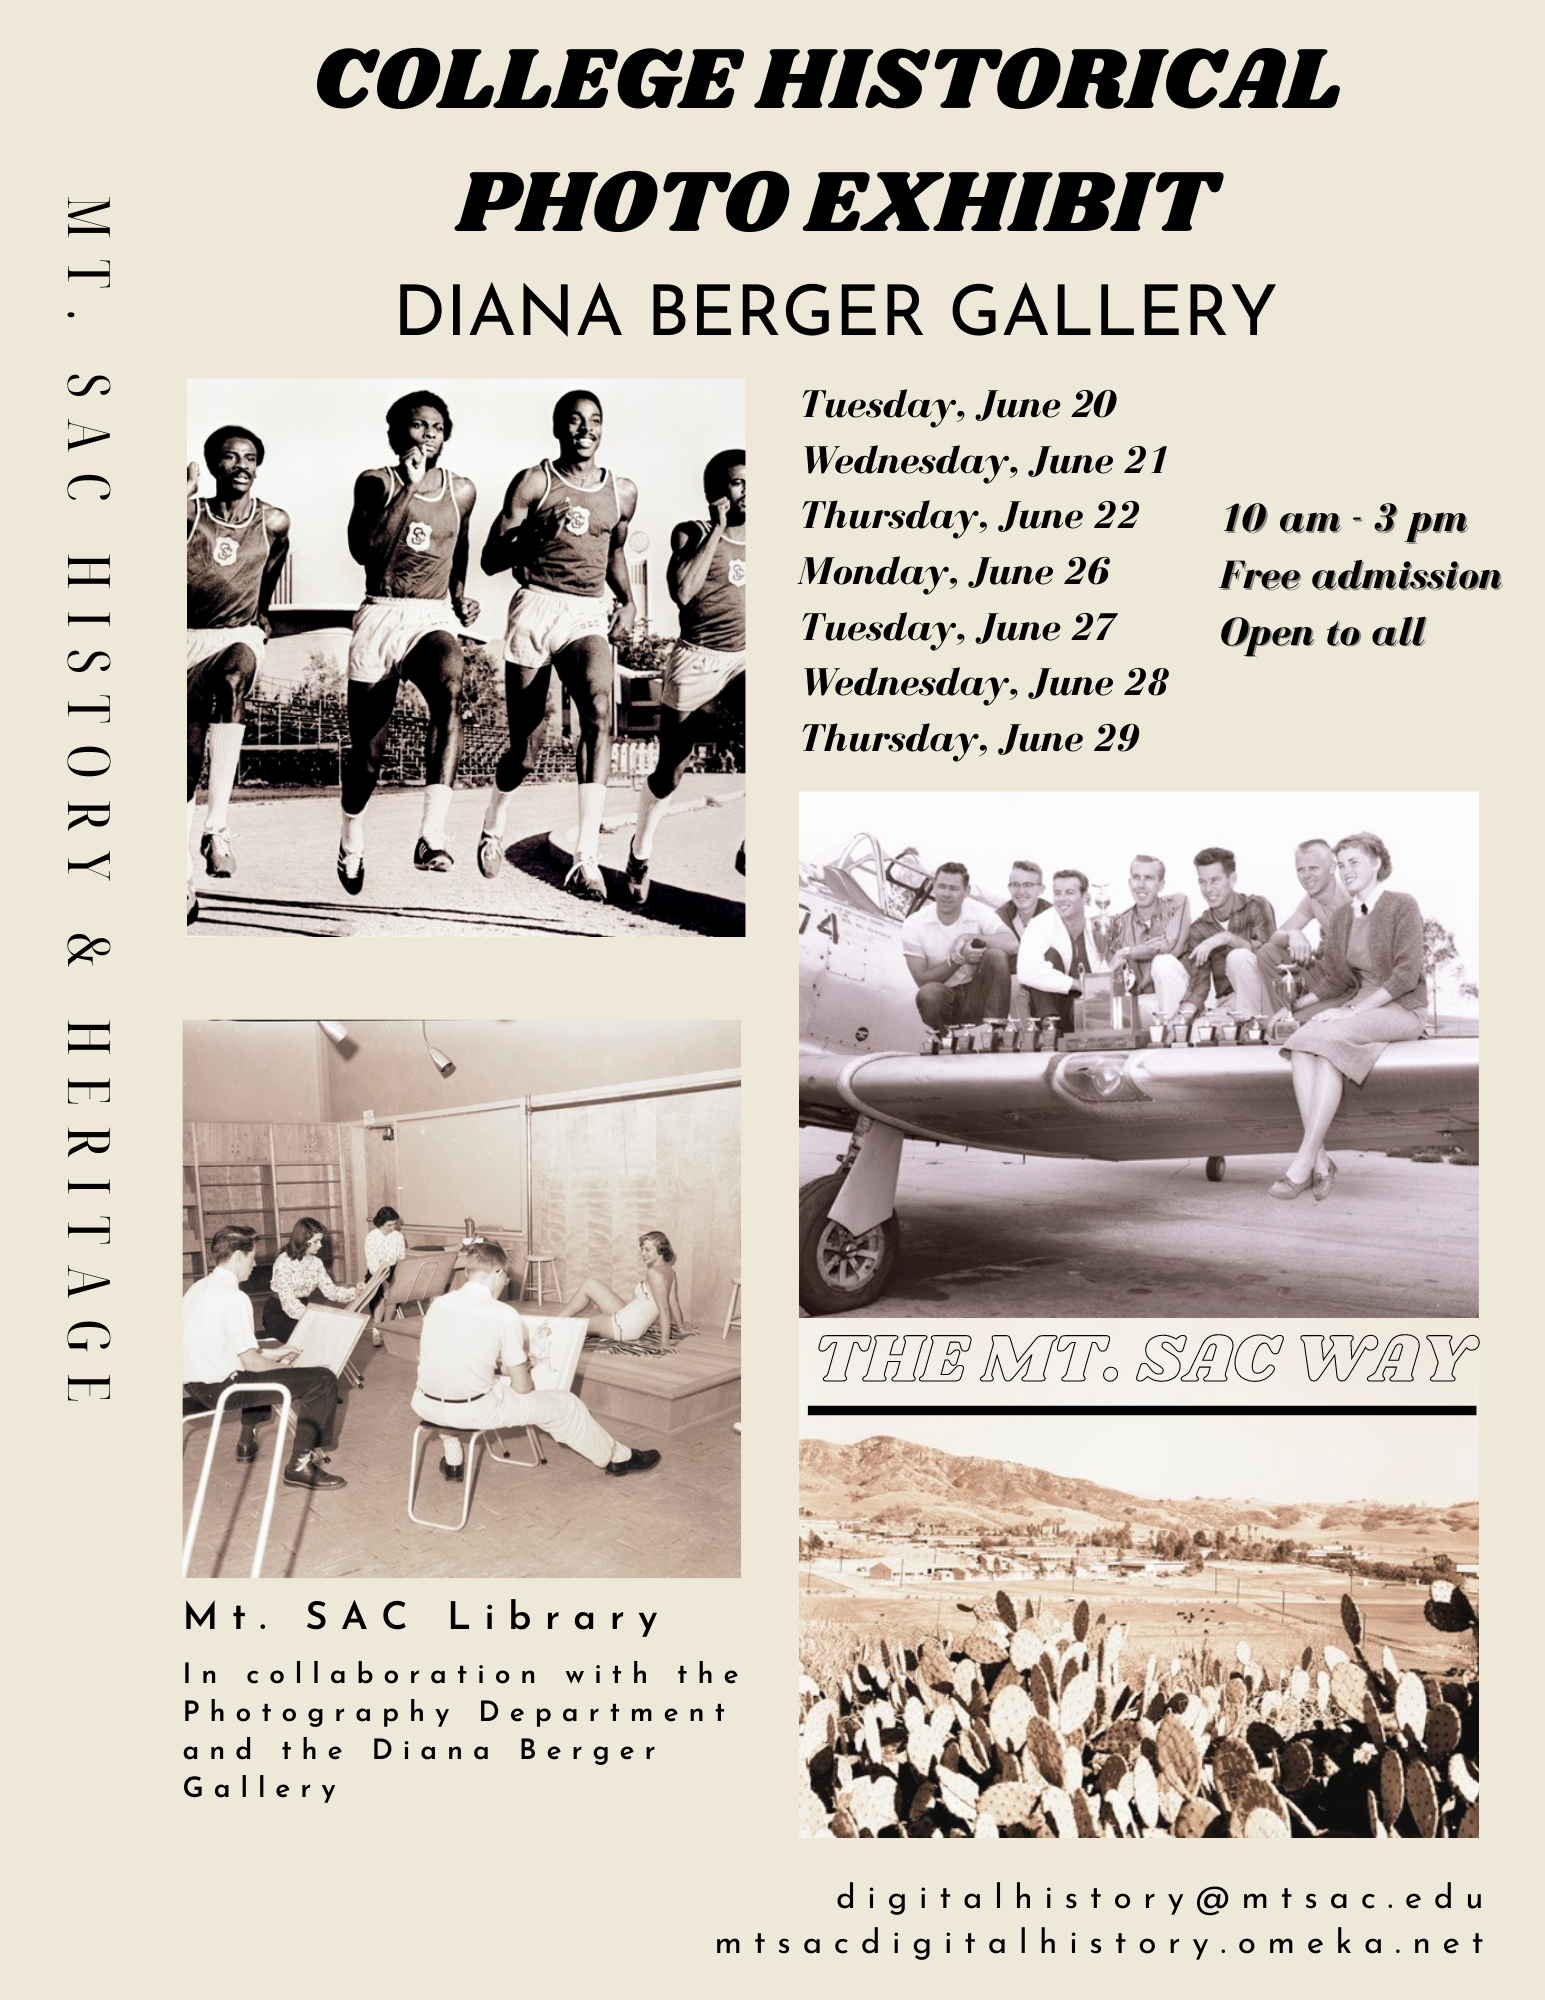 College historical photo art gallery exhibit